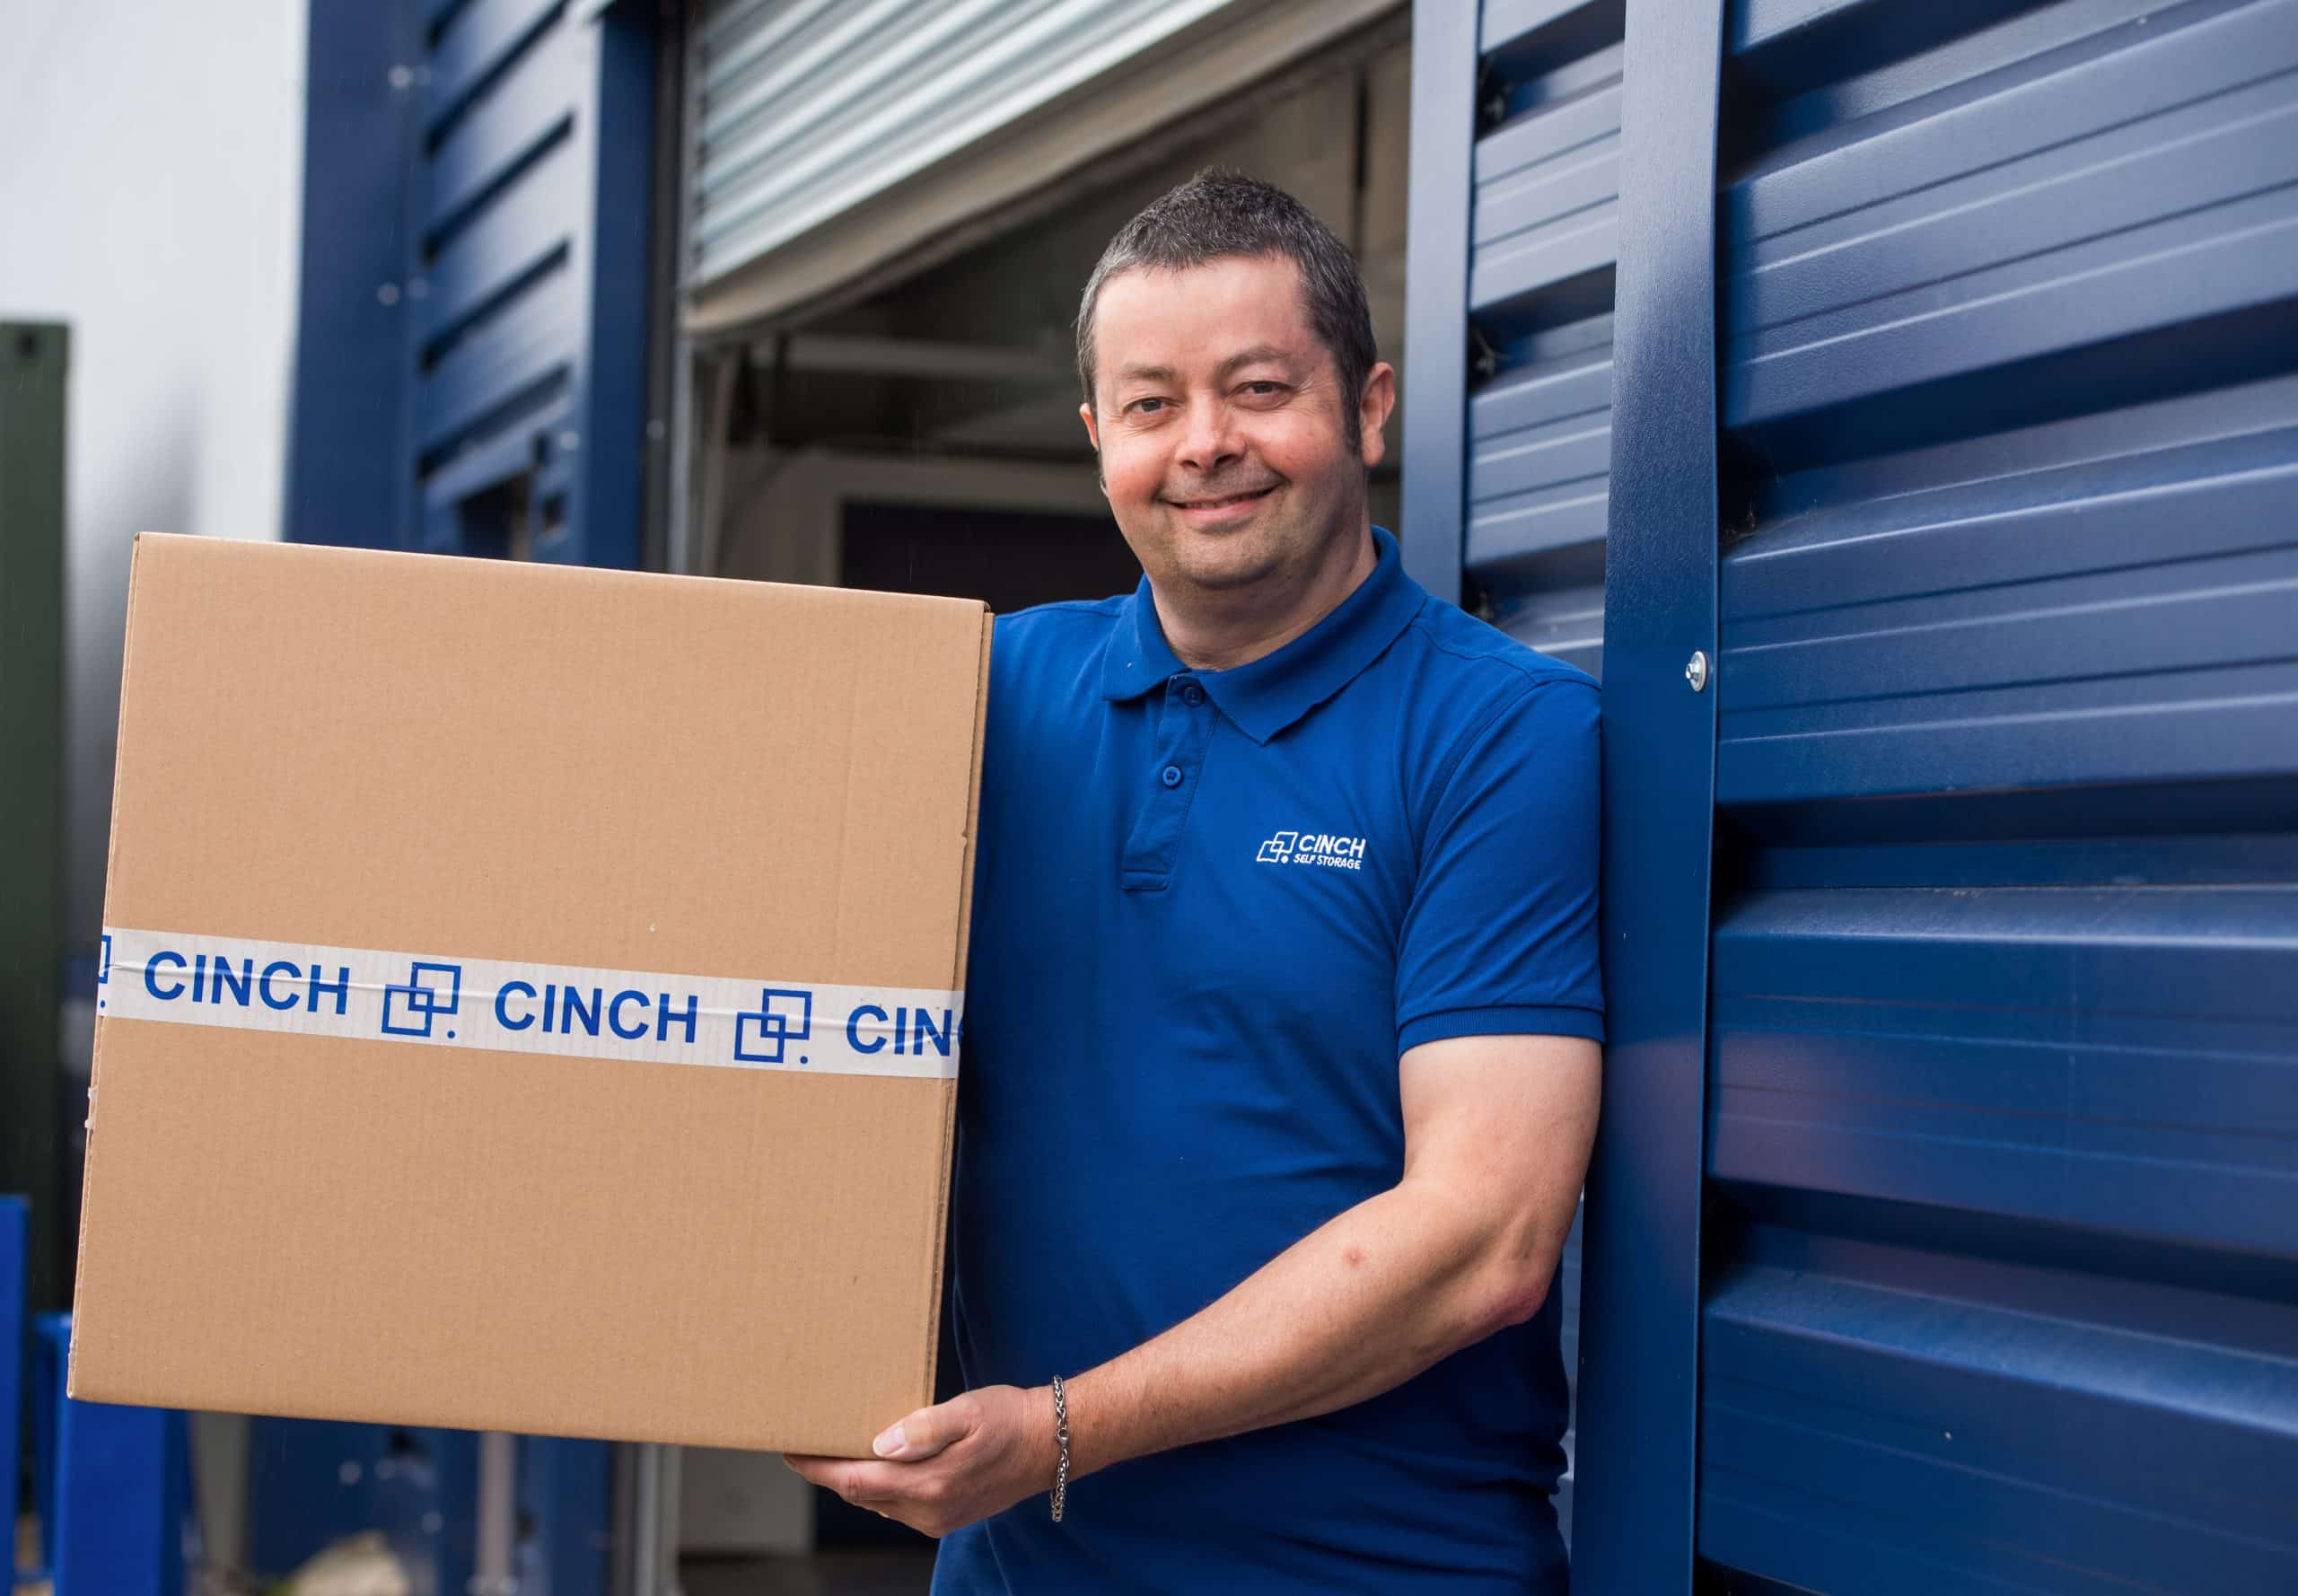 Storage to rent Thatcham - Cinch employee holding Cinch cardboard box outside storage facility